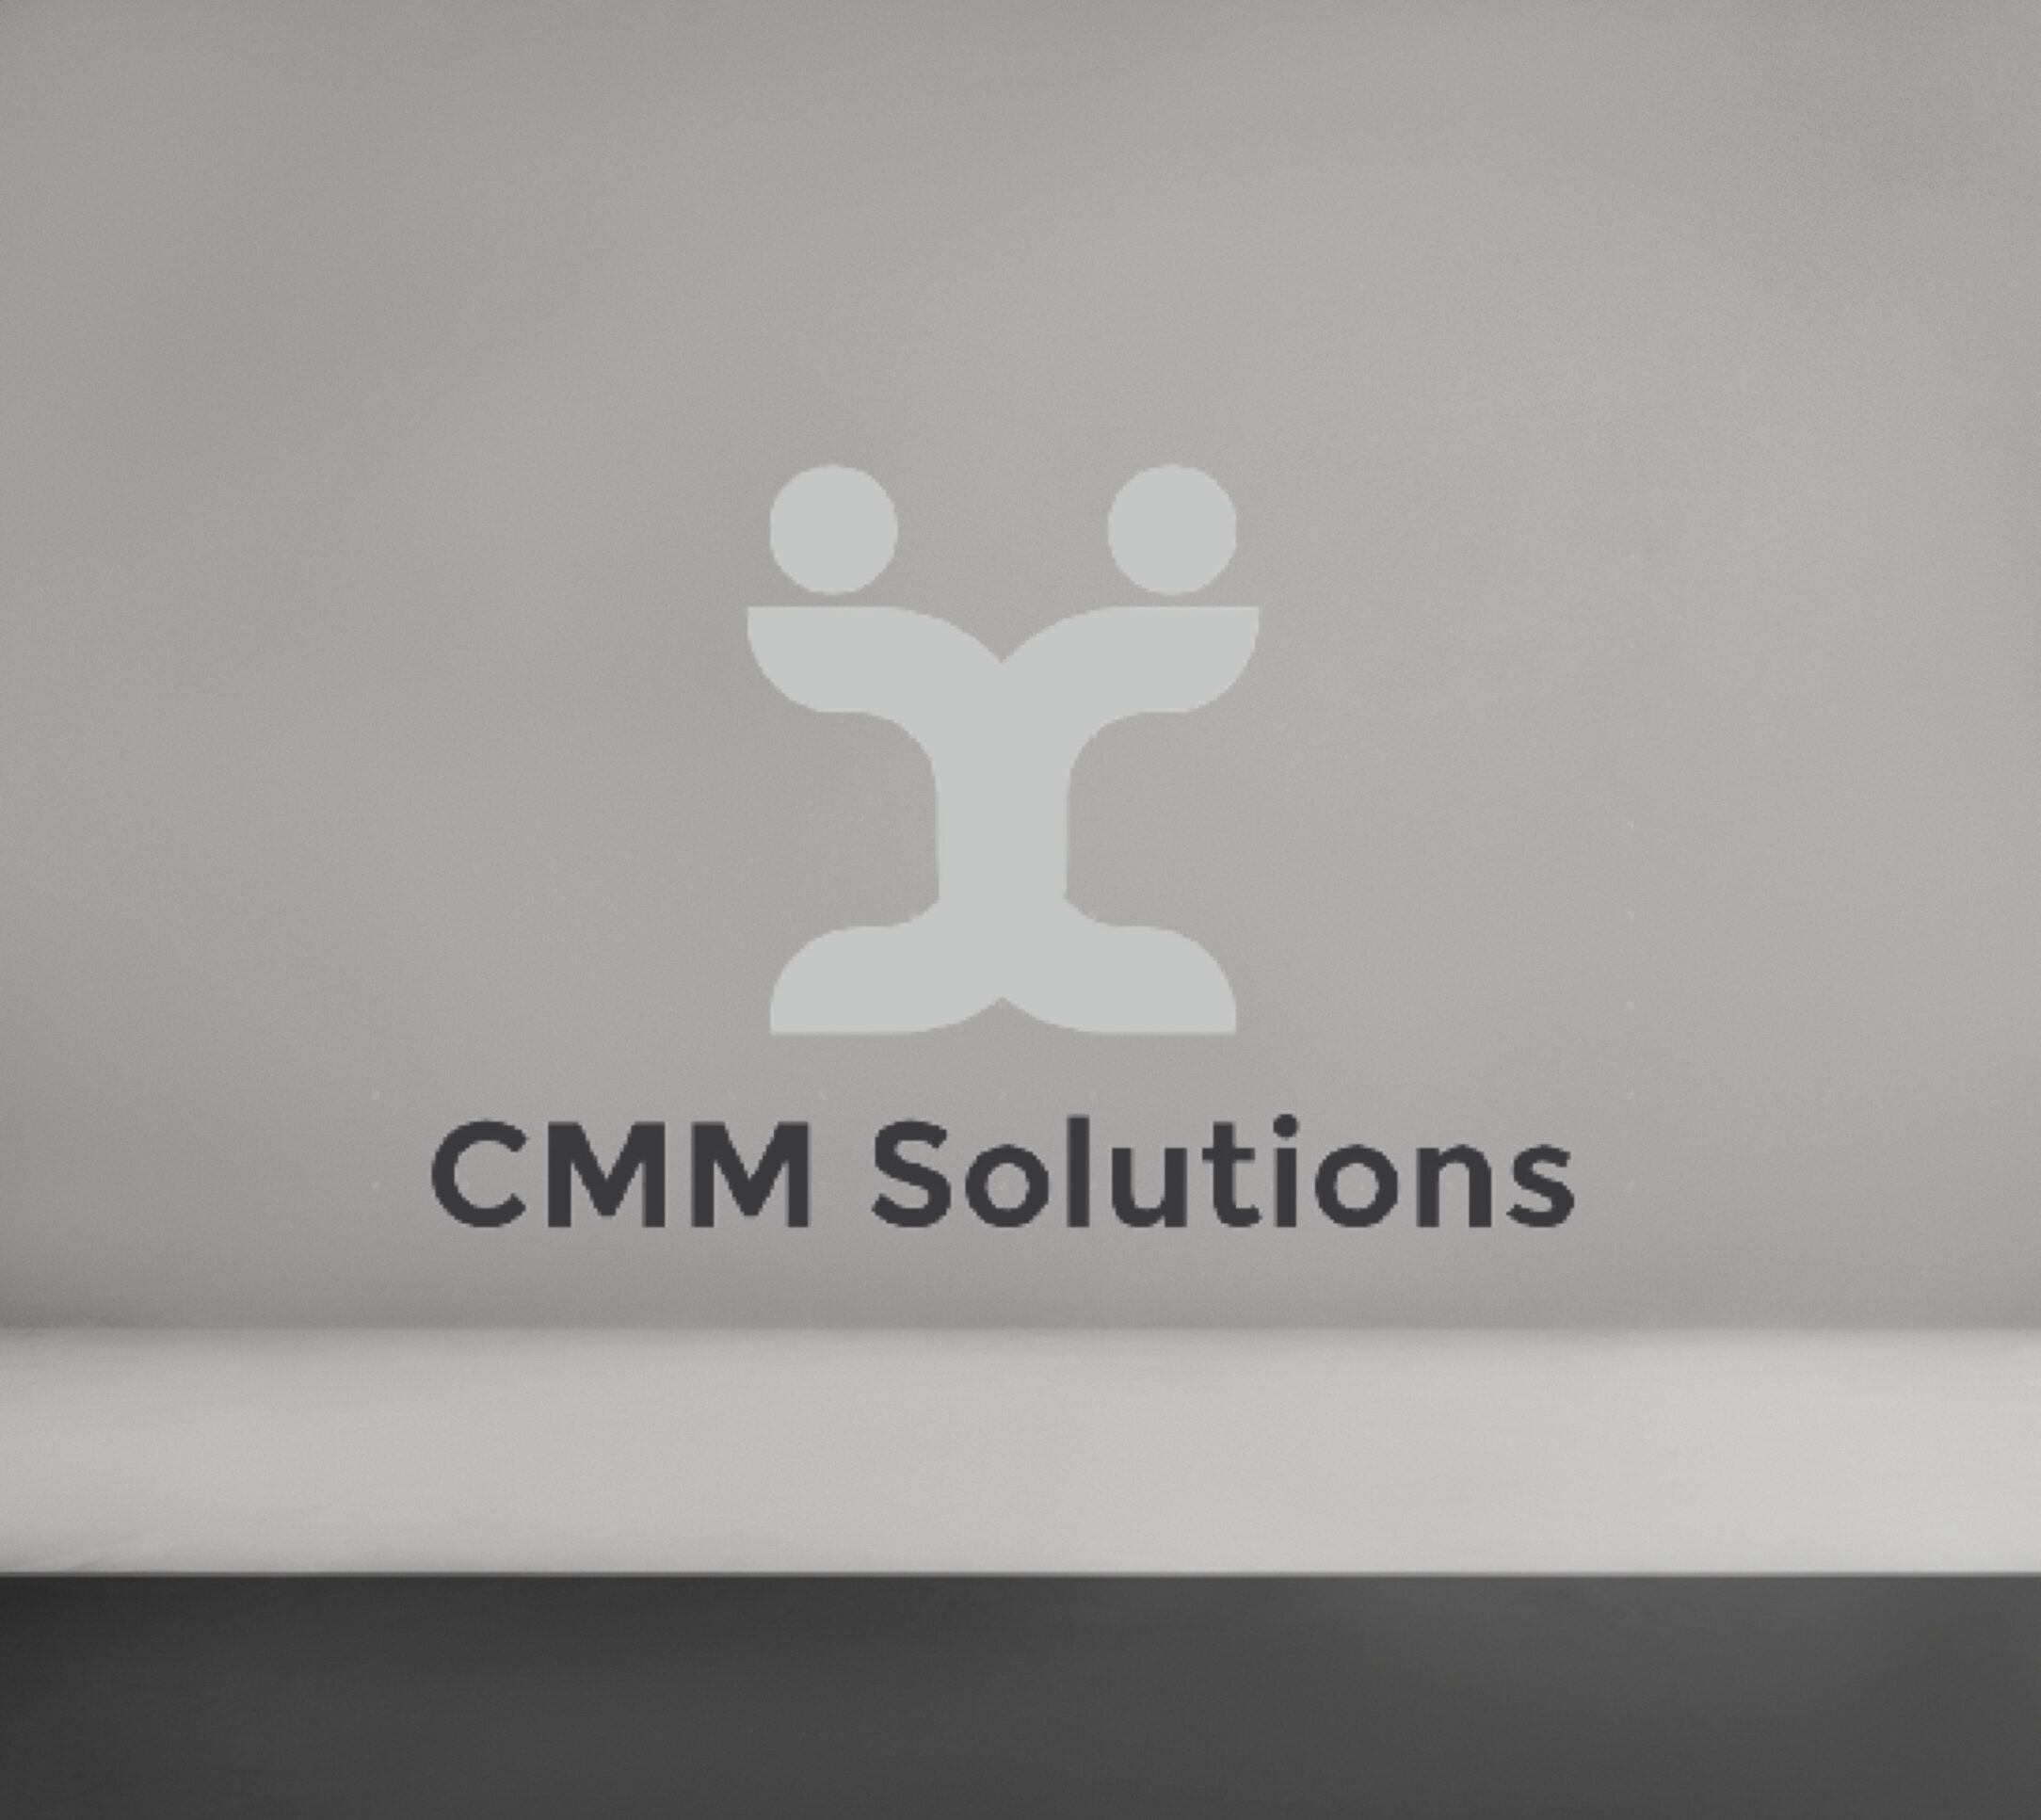 jyd-project-cmm-solutions-logo-view